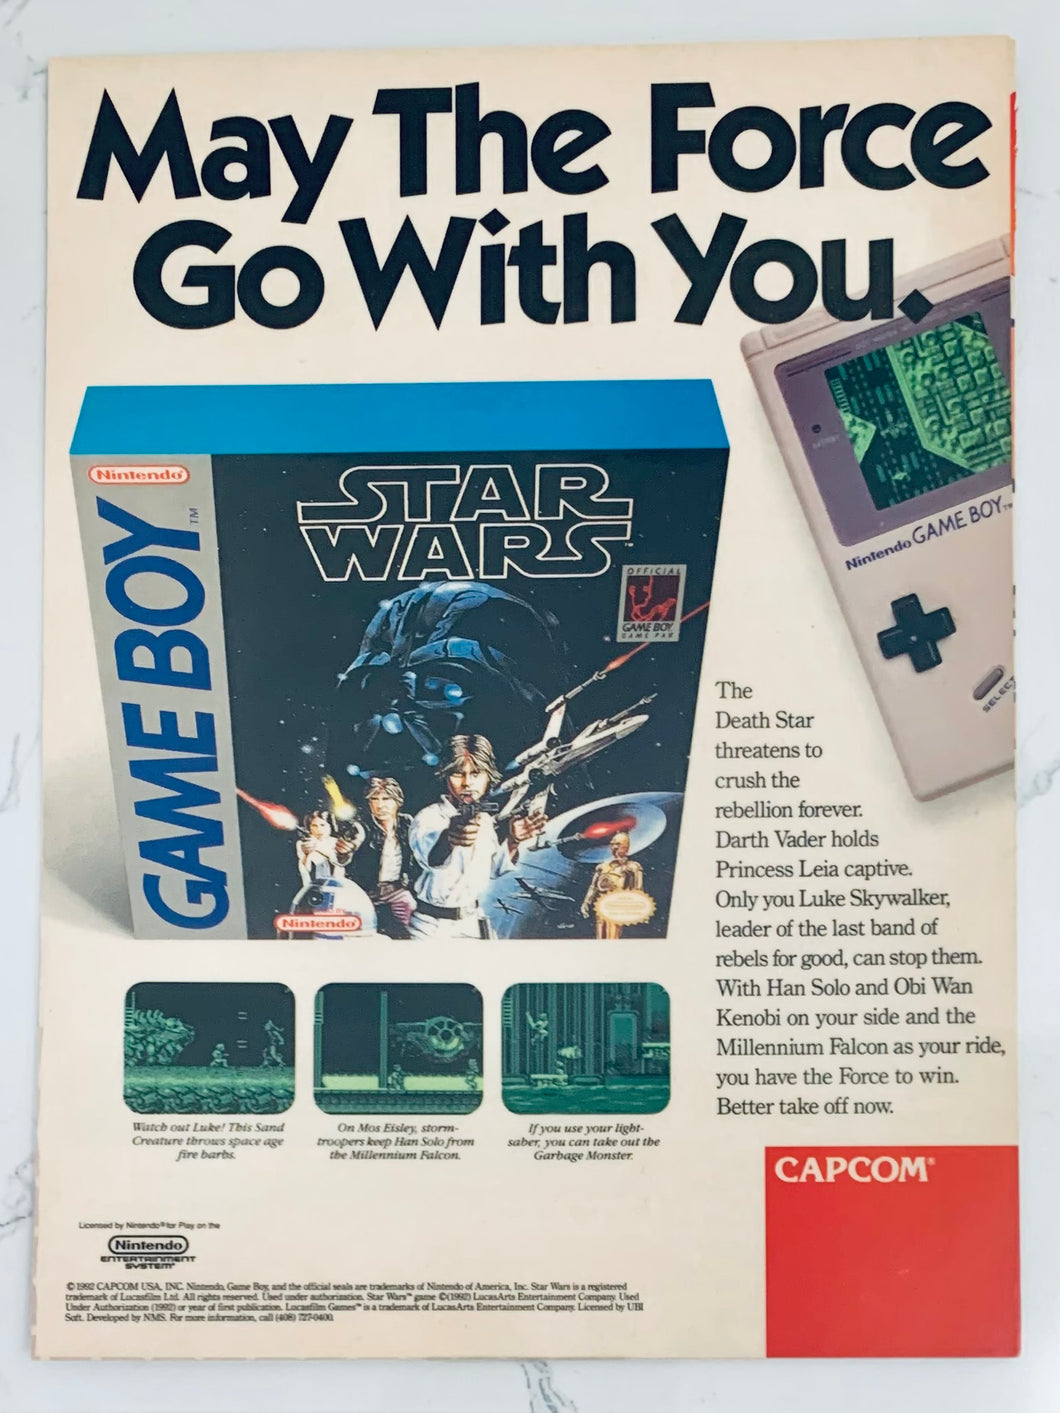 Star Wars - GameBoy - Original Vintage Advertisement - Print Ads - Laminated A4 Poster